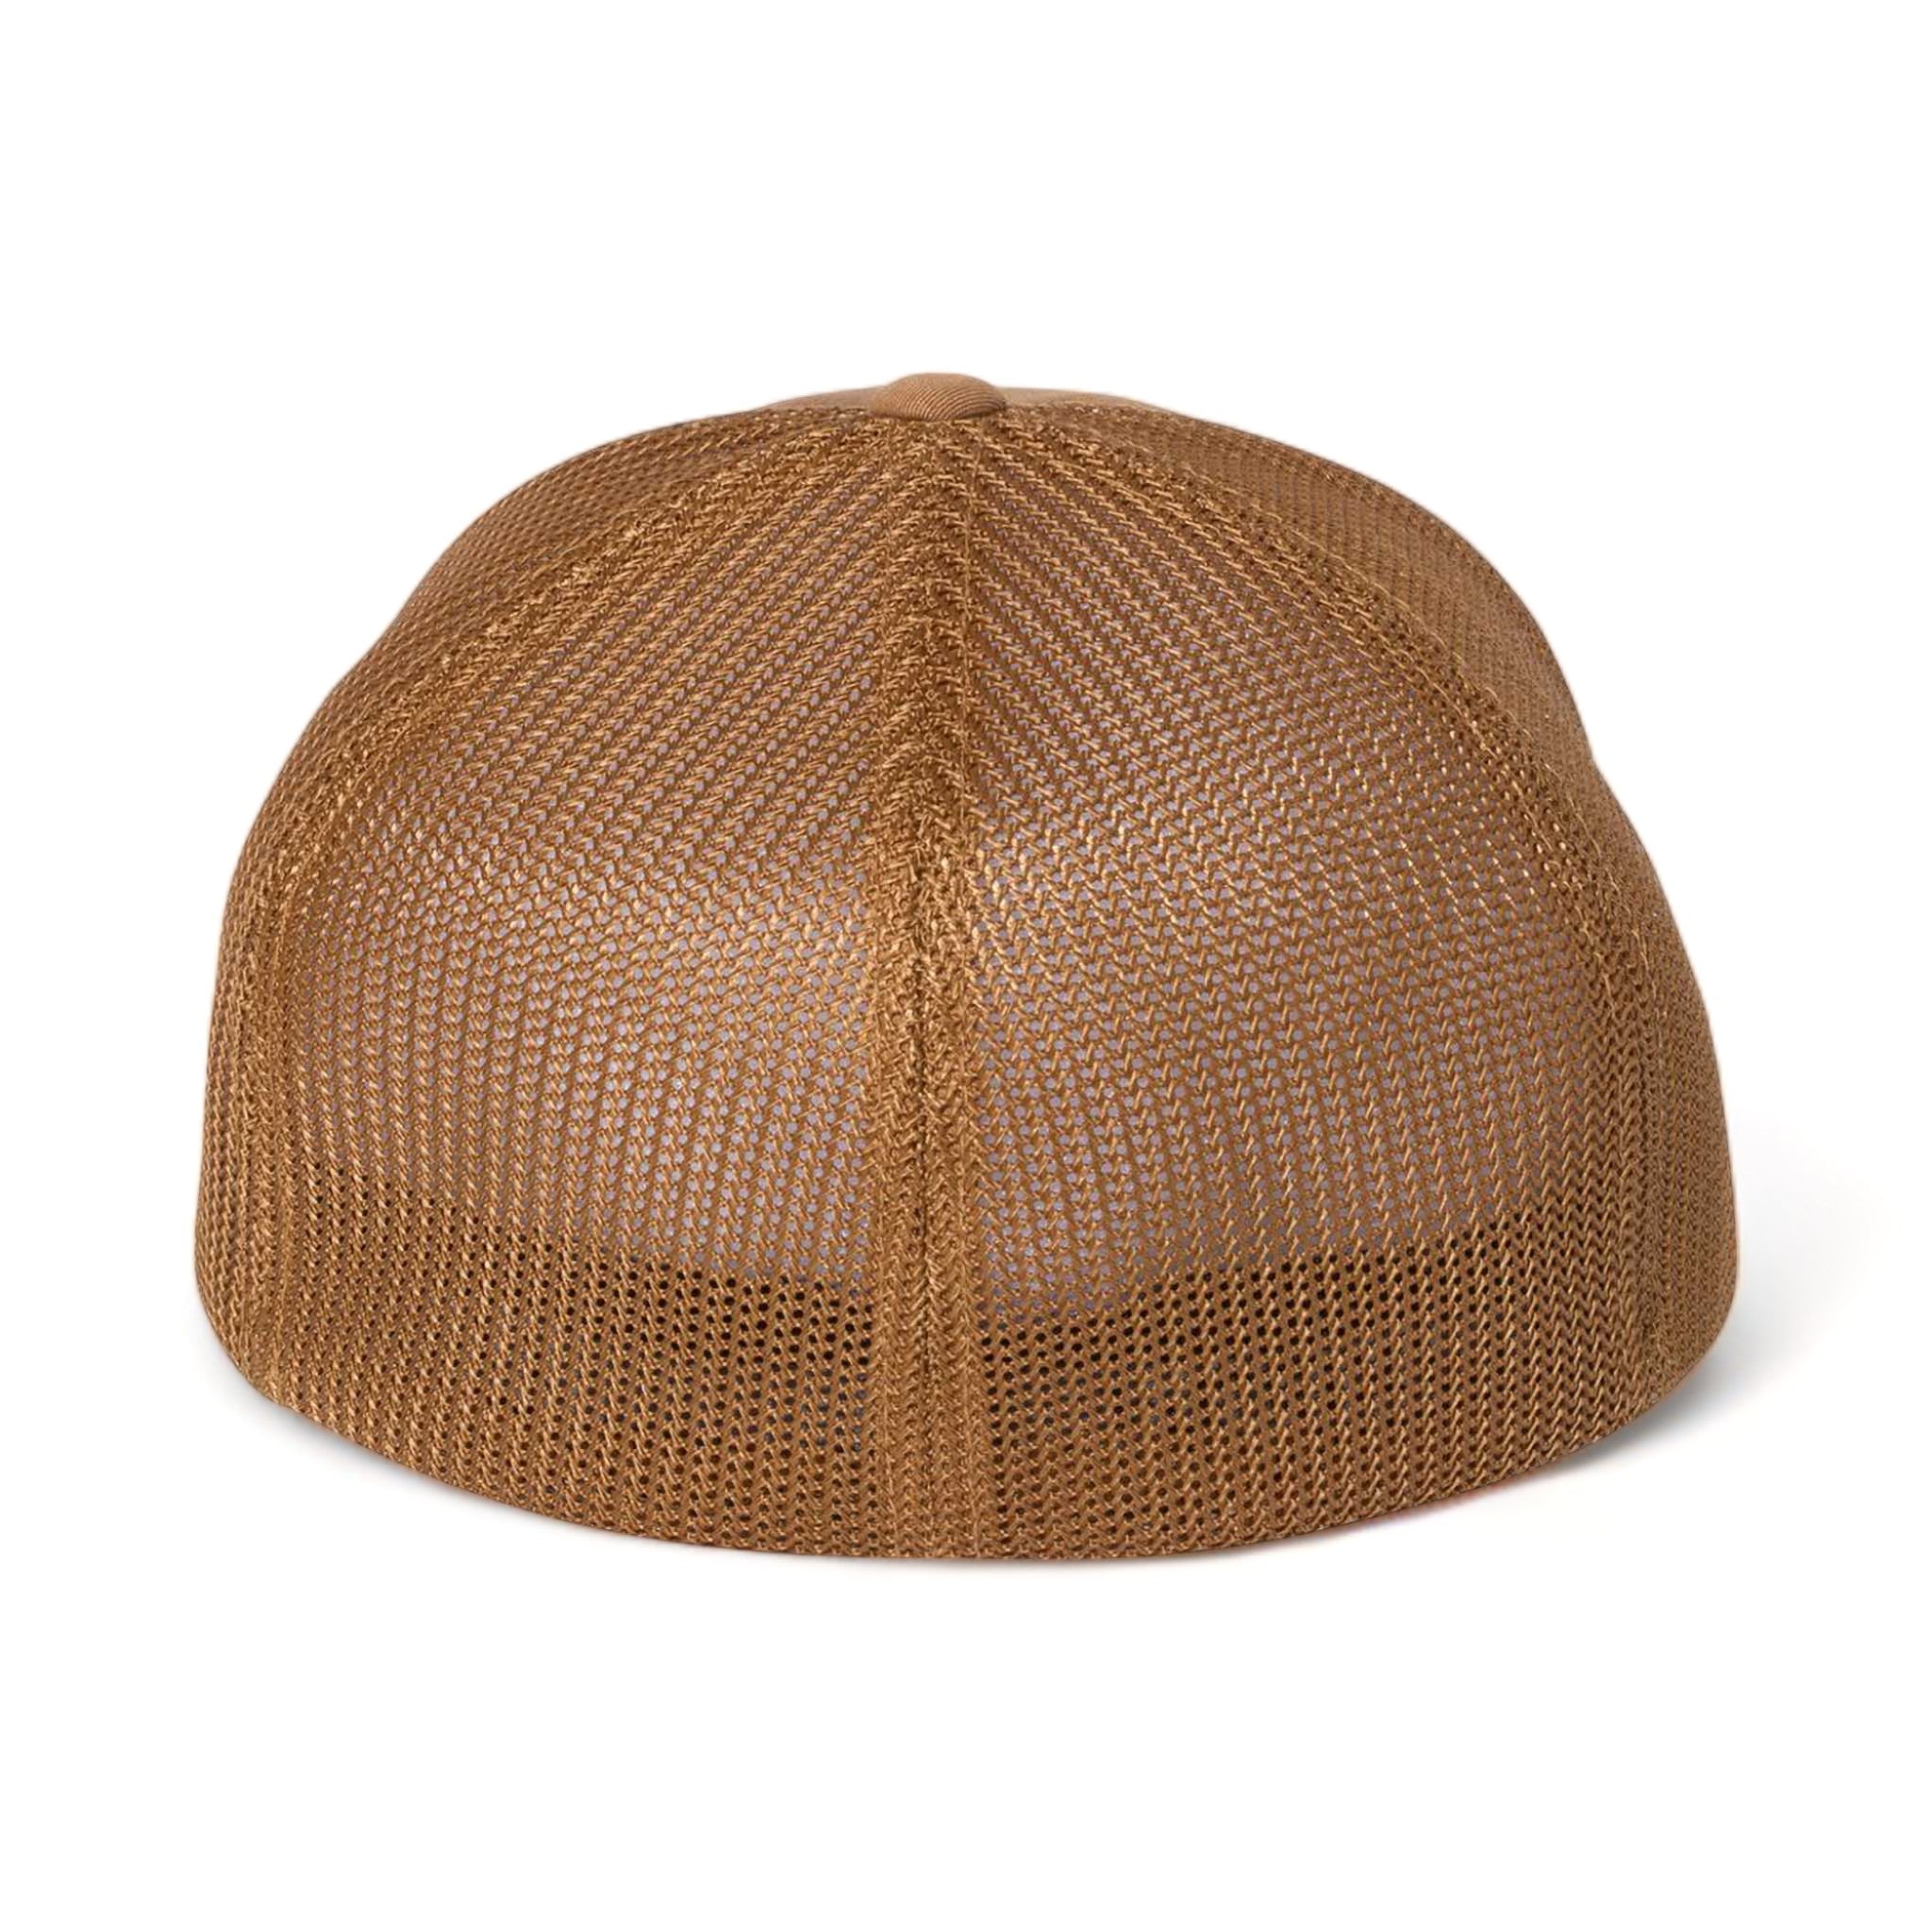 Back view of Flexfit 6511 custom hat in caramel